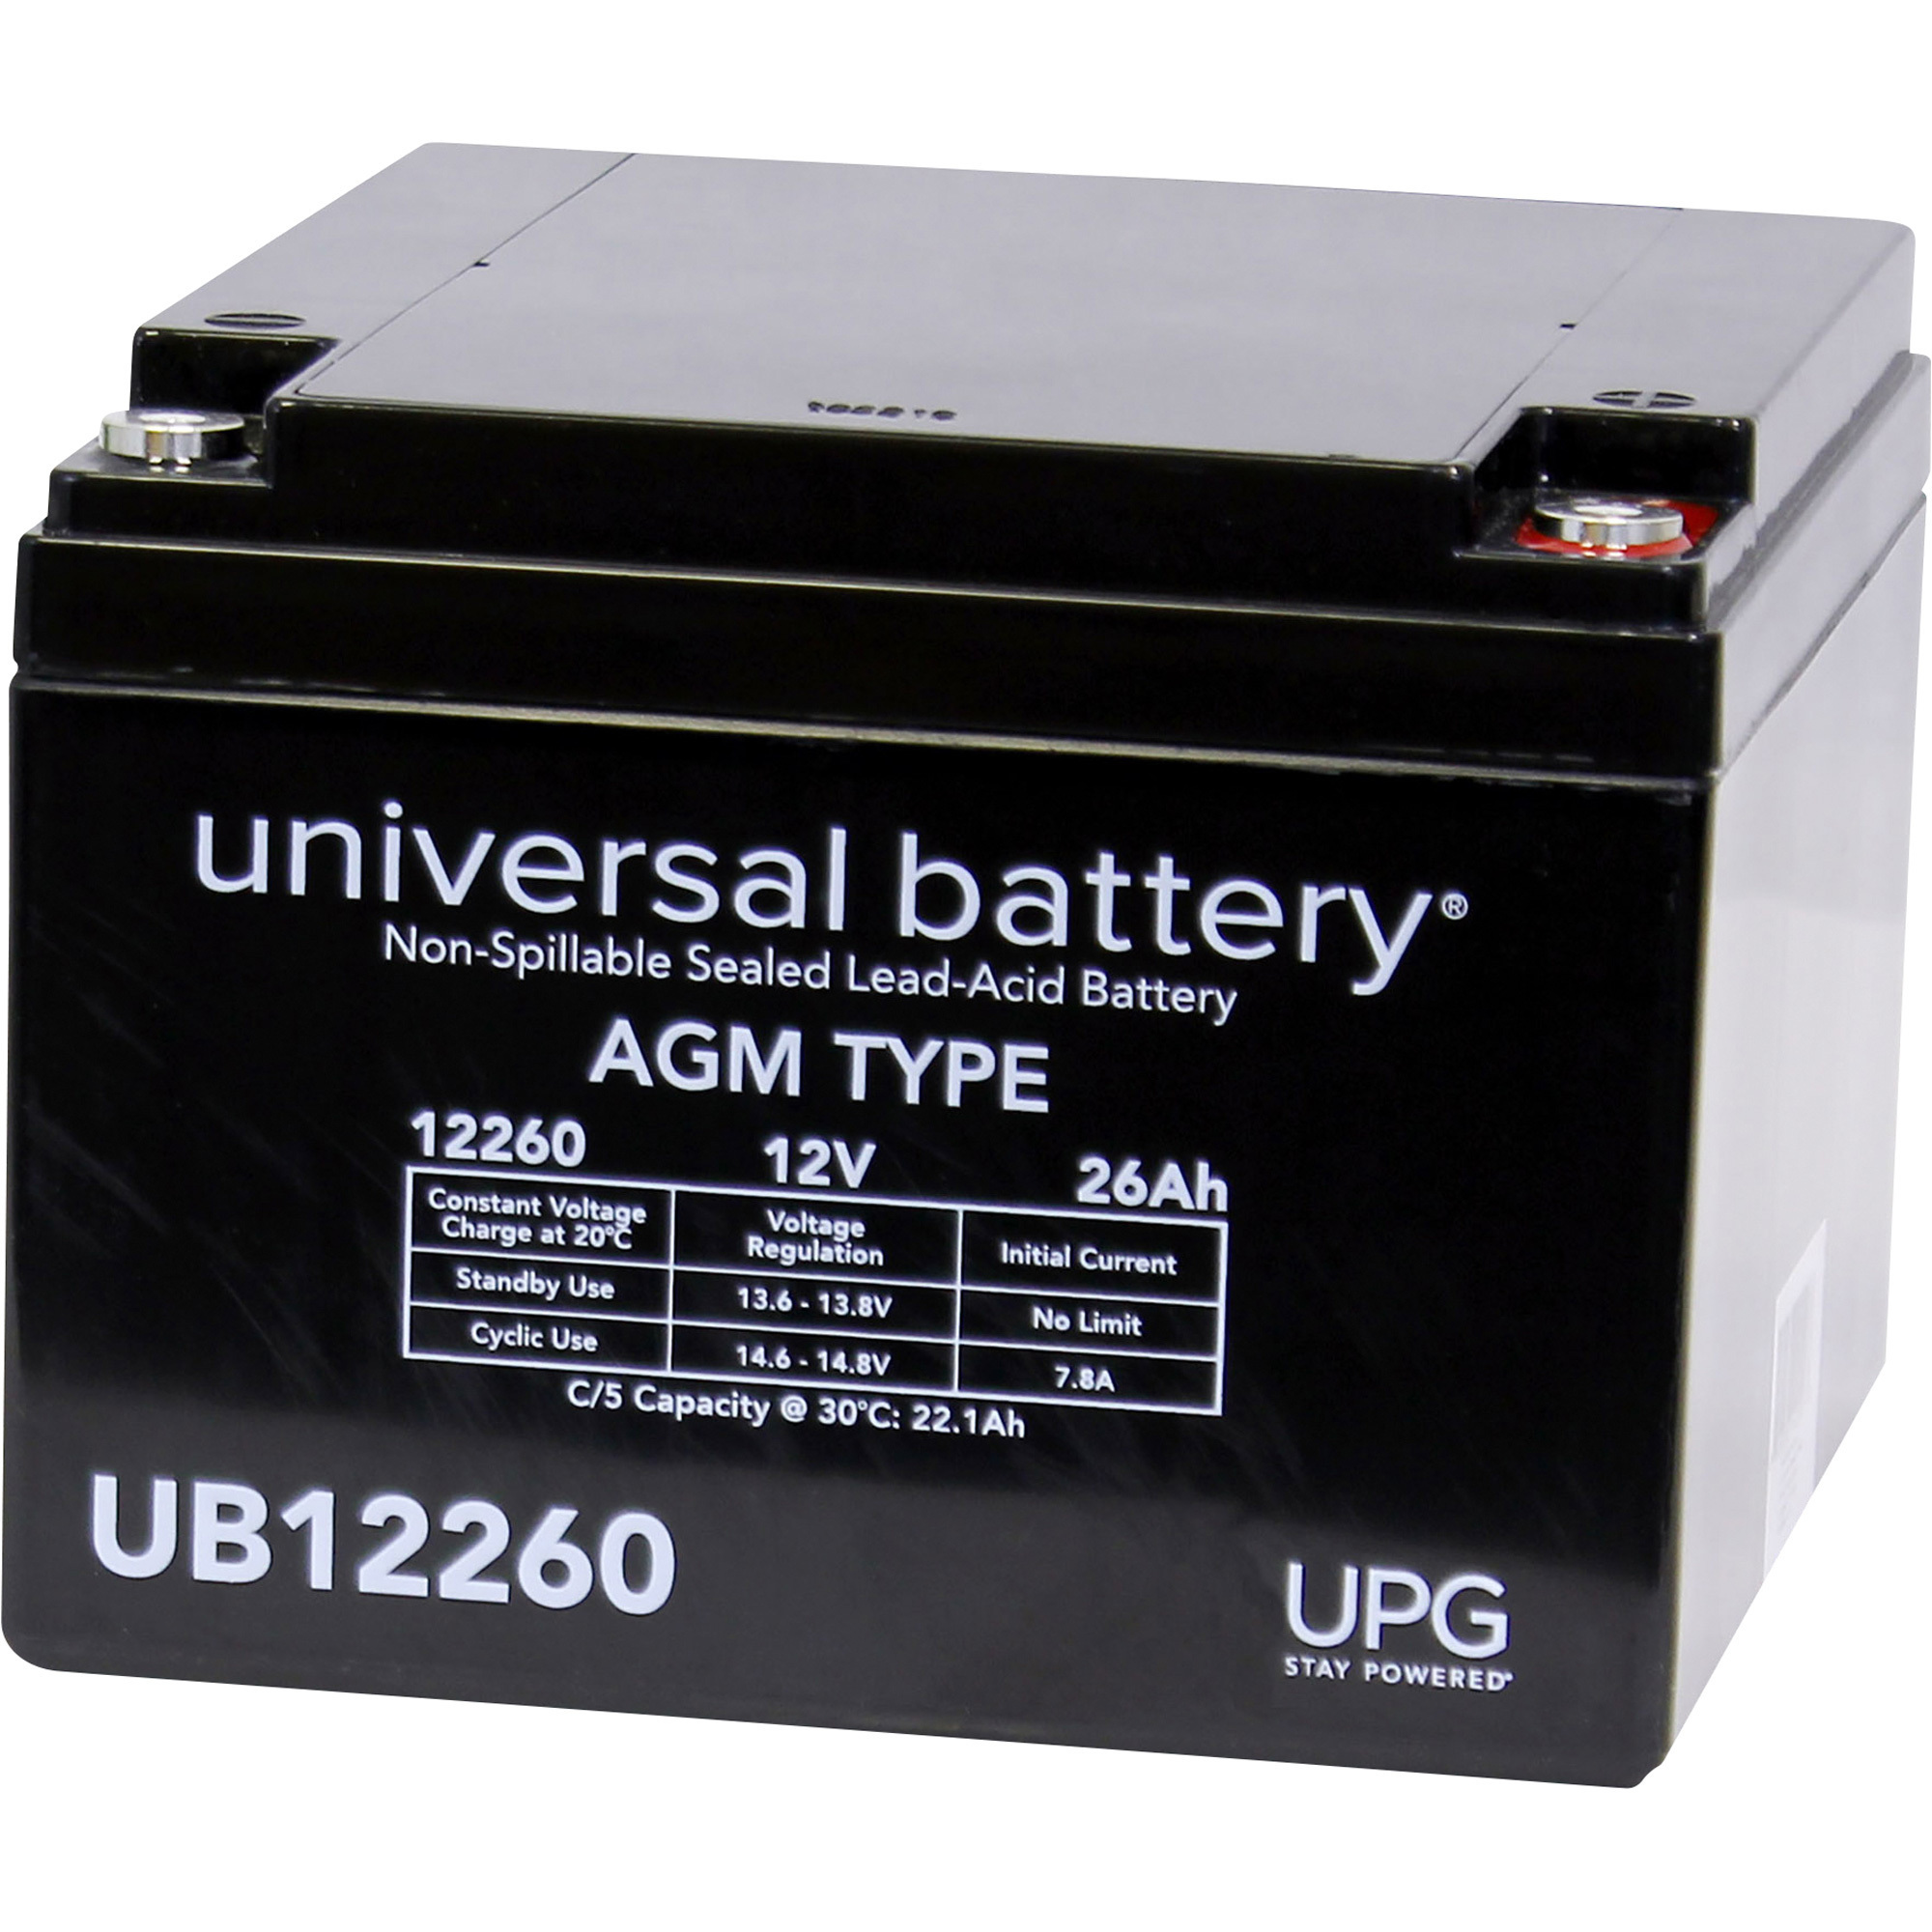 UPG Universal Sealed Lead-Acid Battery, AGM-type, 12V, 26 Amps, Model UB12260